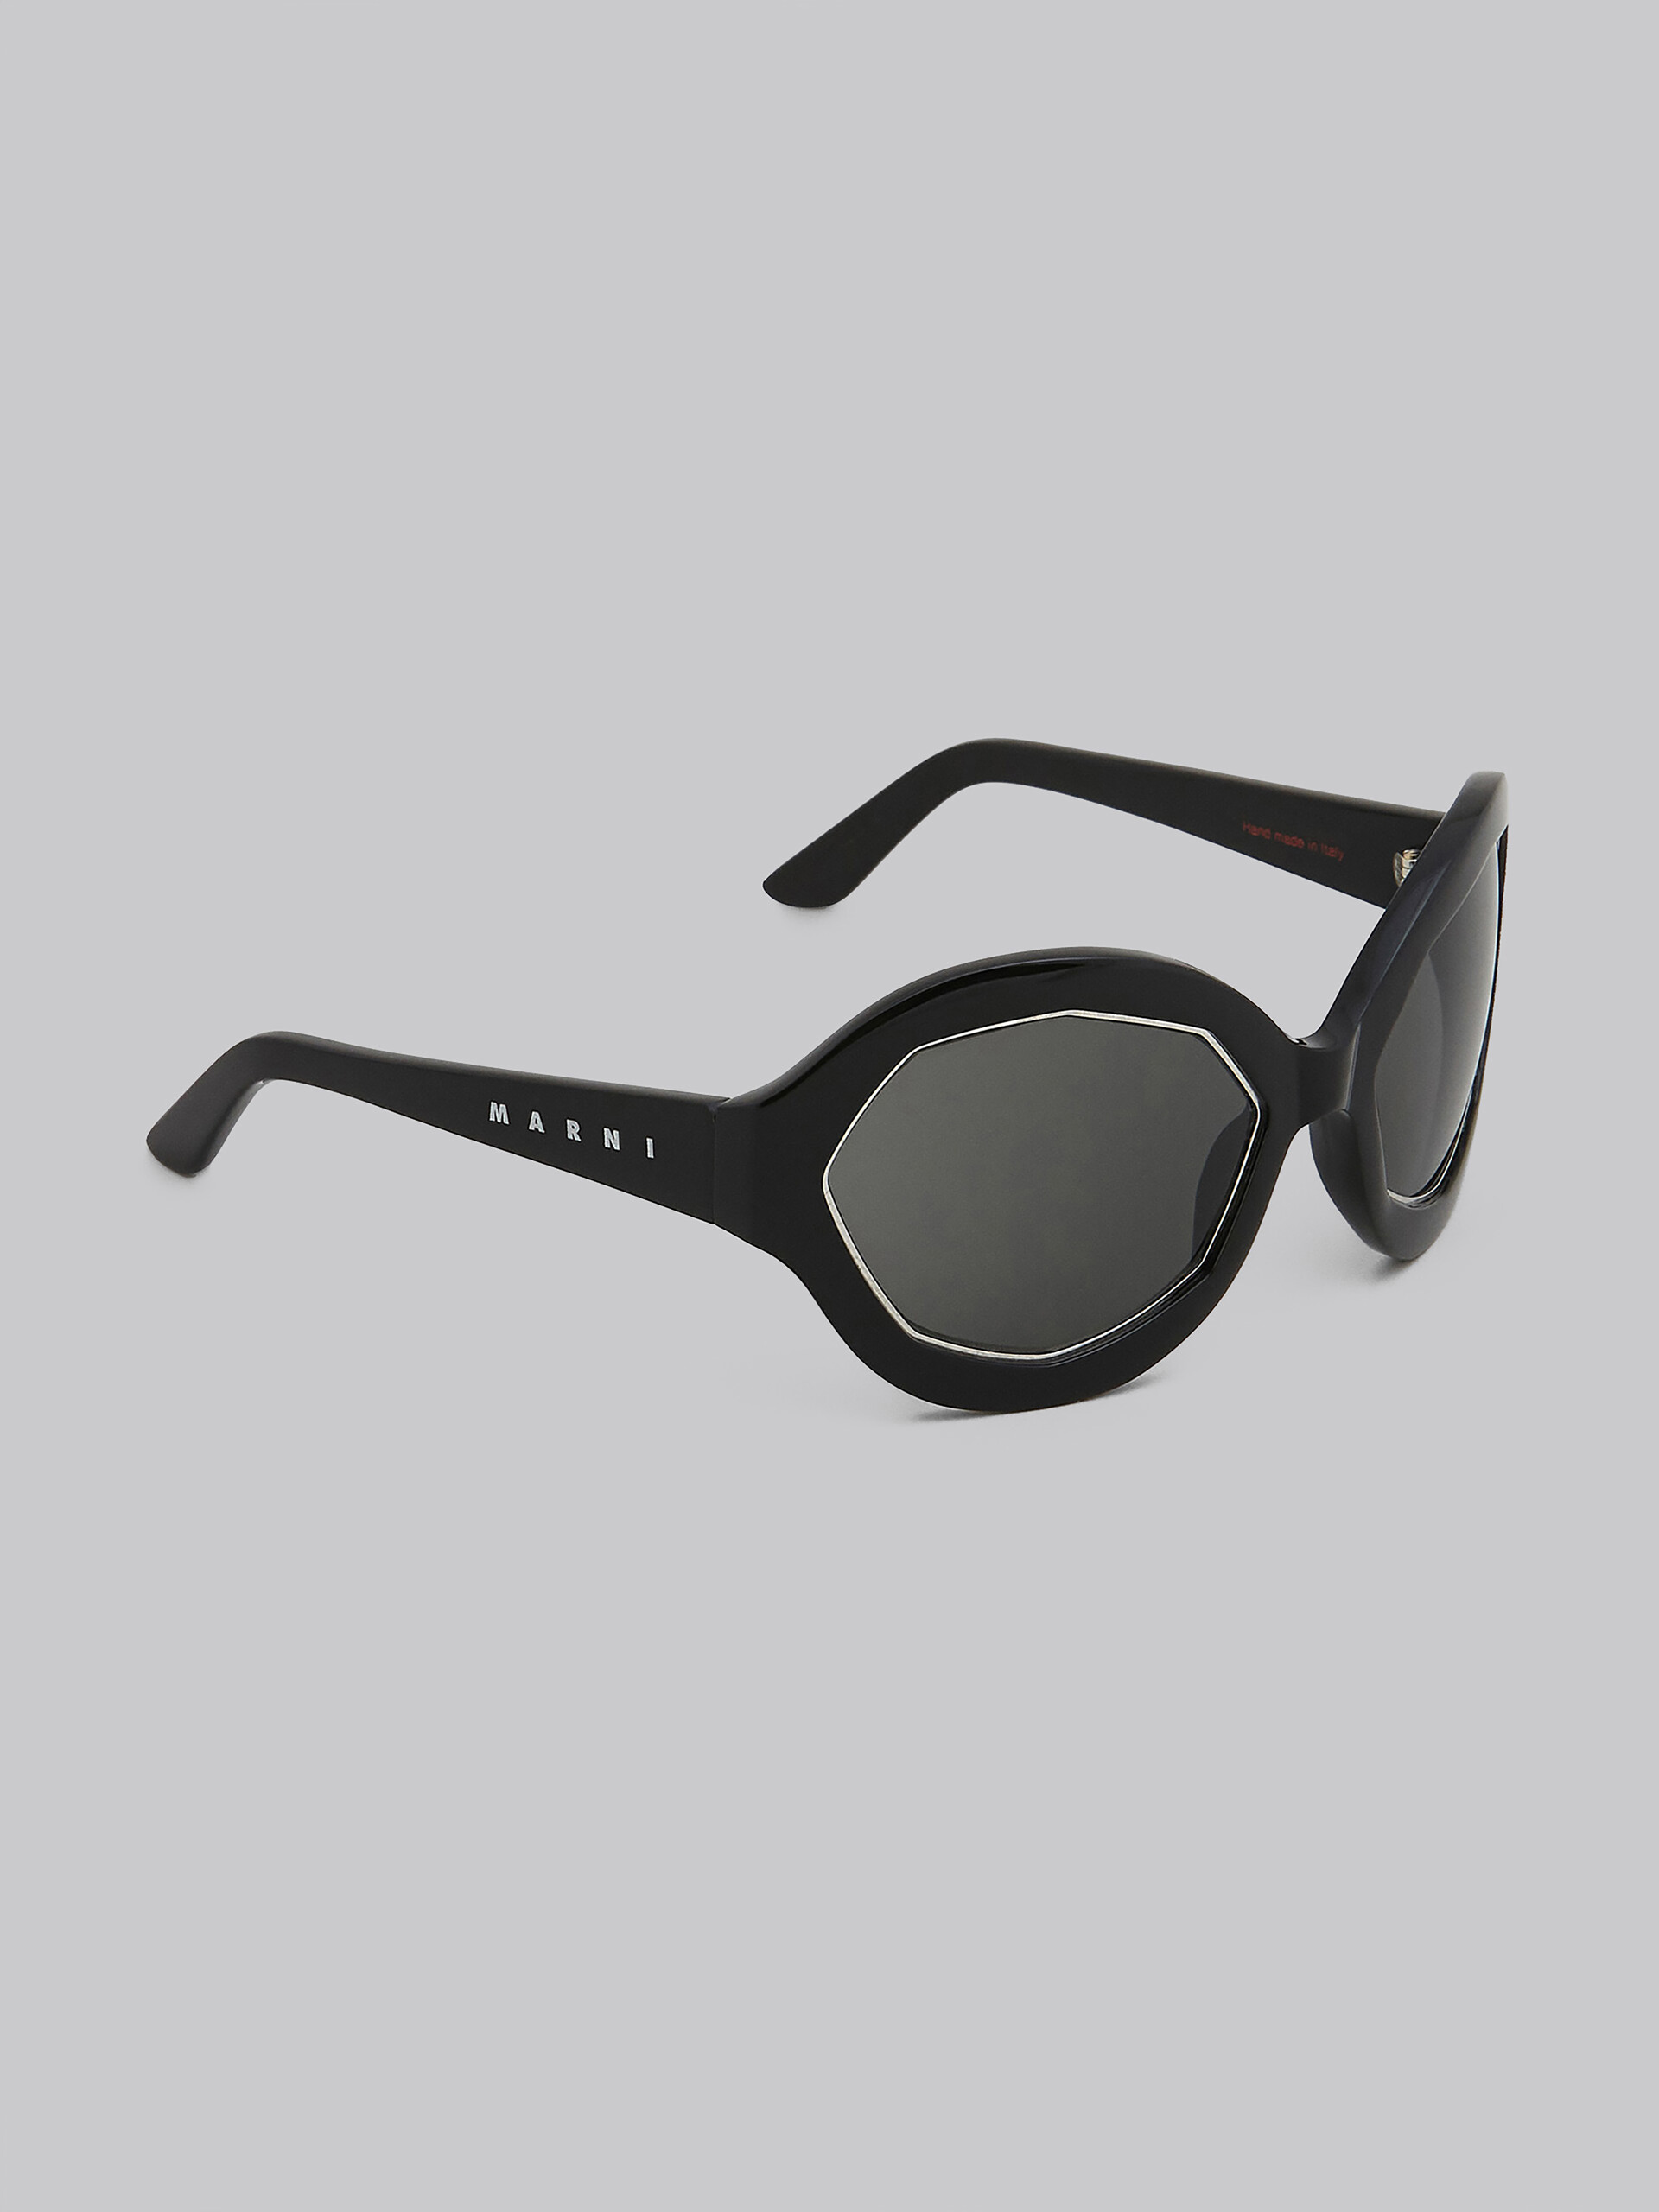 CUMULUS CLOUD black acetate and nylon sunglasses - Optical - Image 2